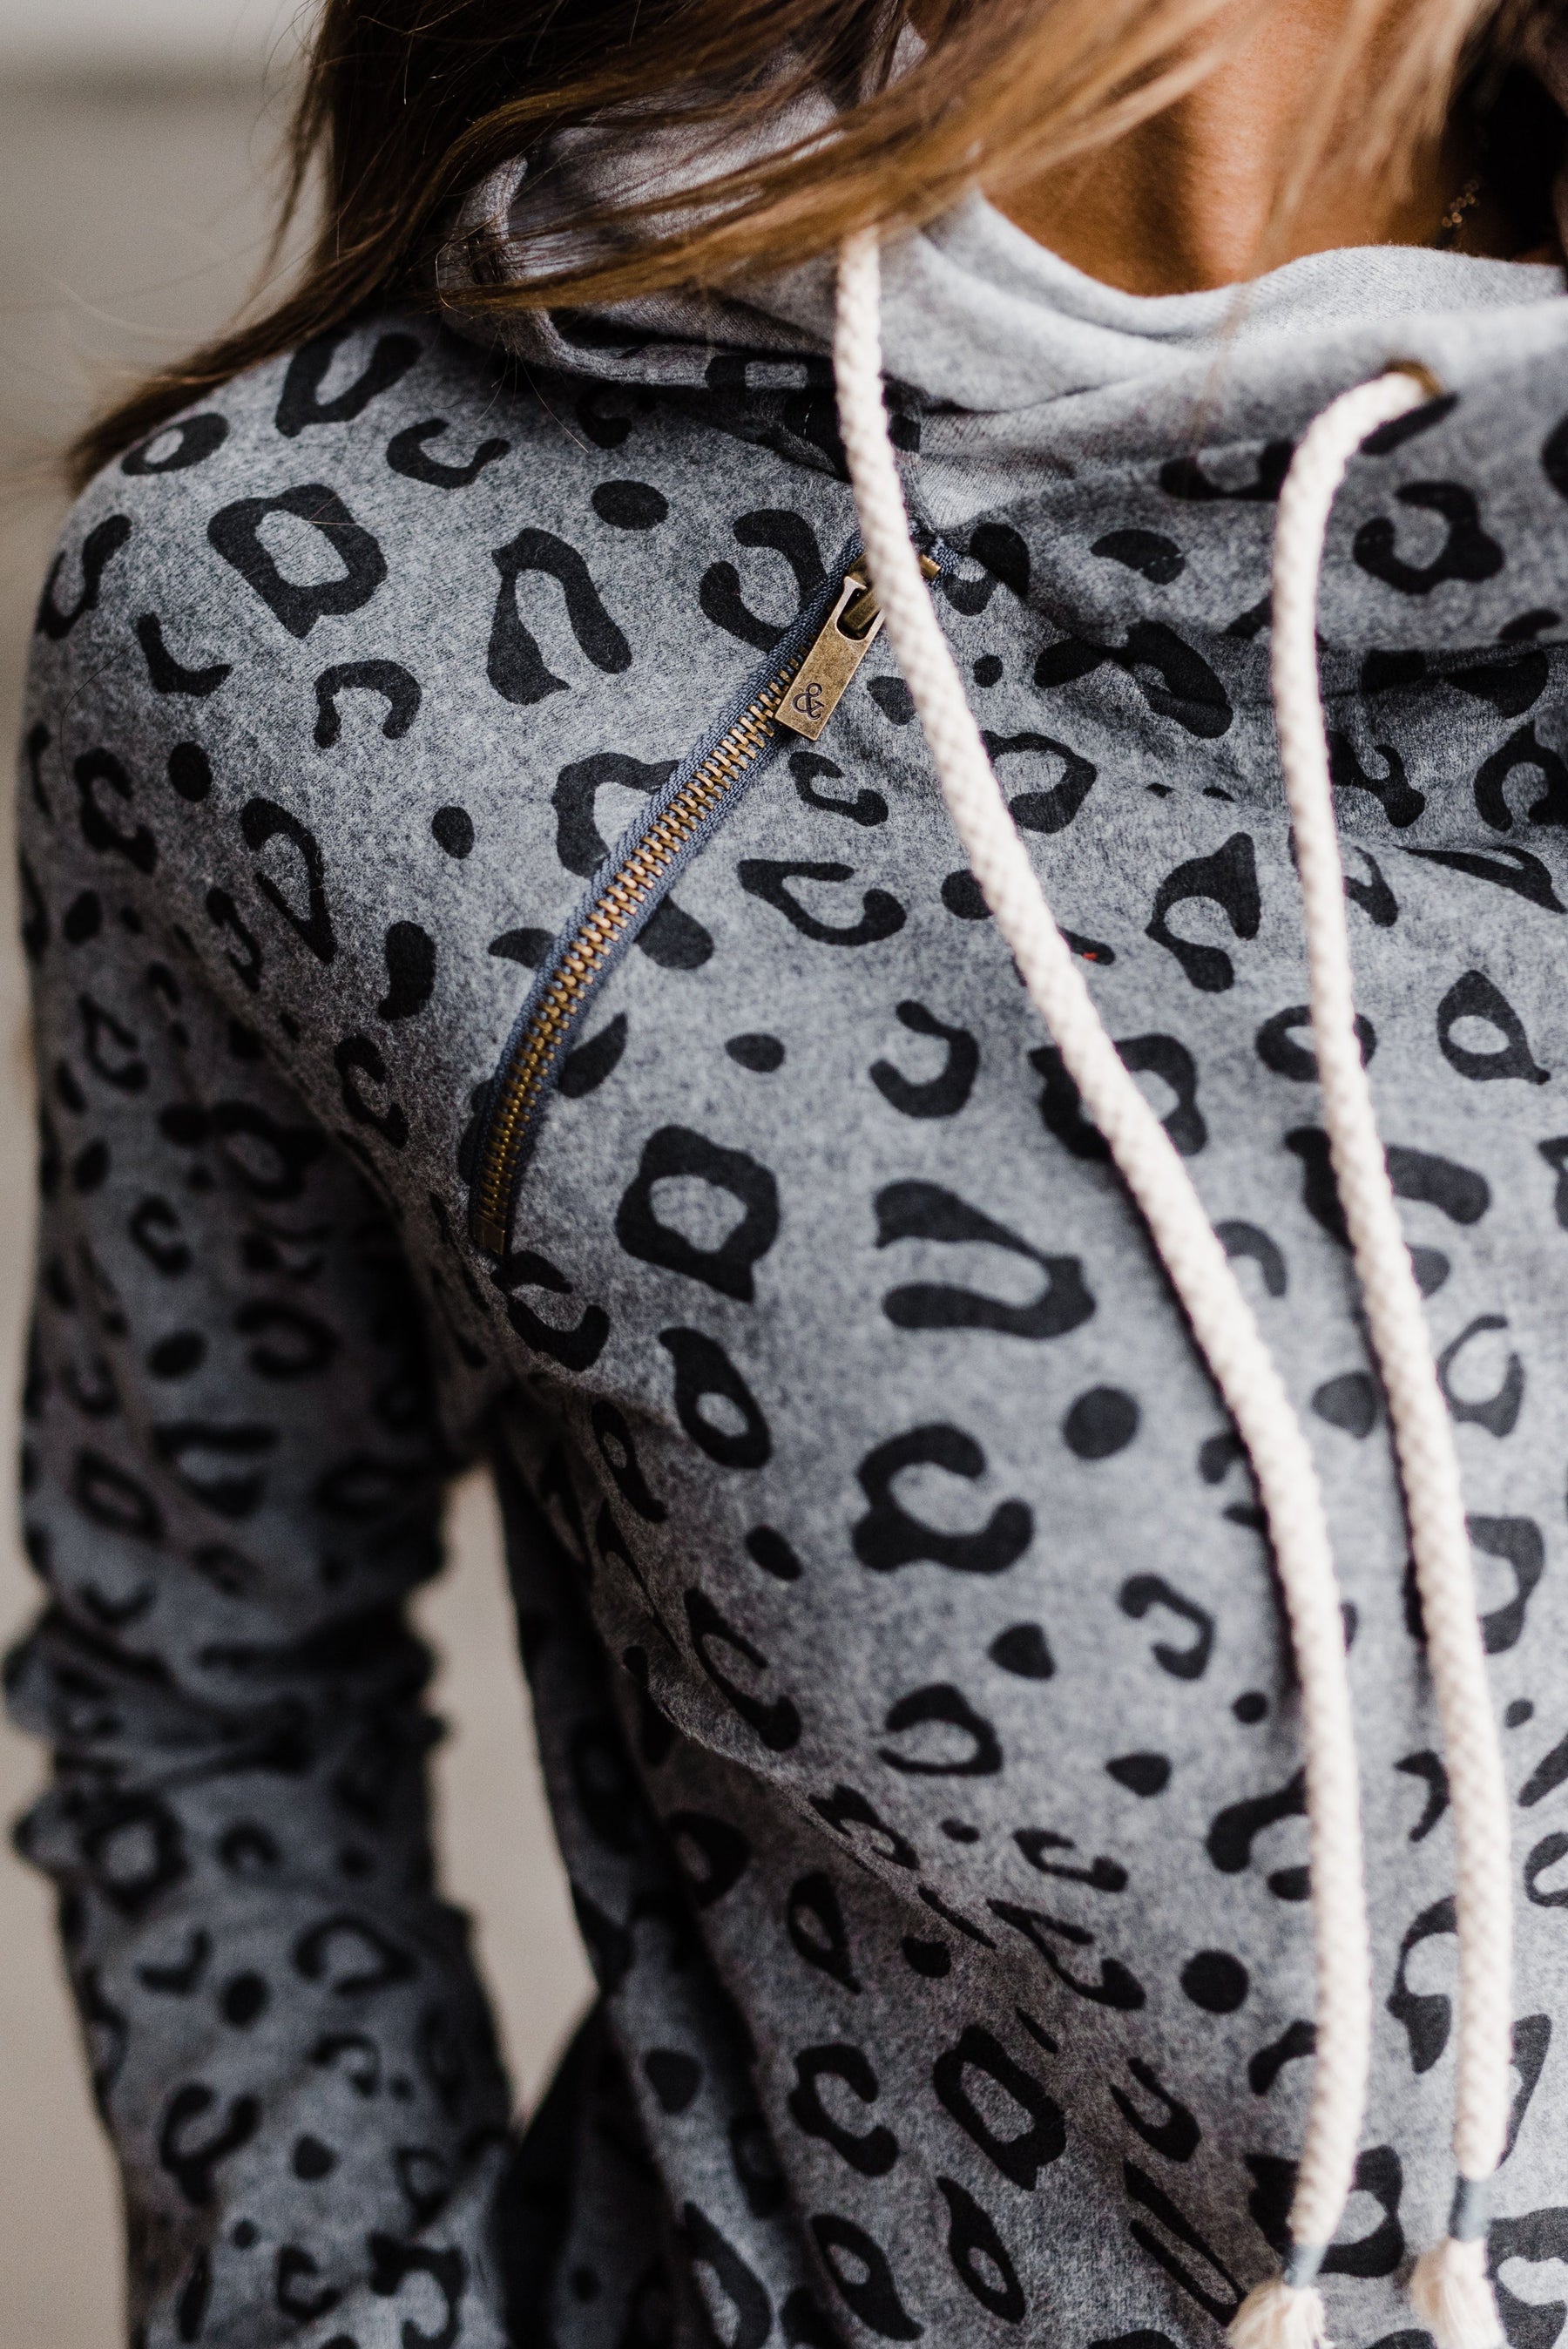 Ampersand Avenue Doublehood™ Sweatshirt - Look At Meow